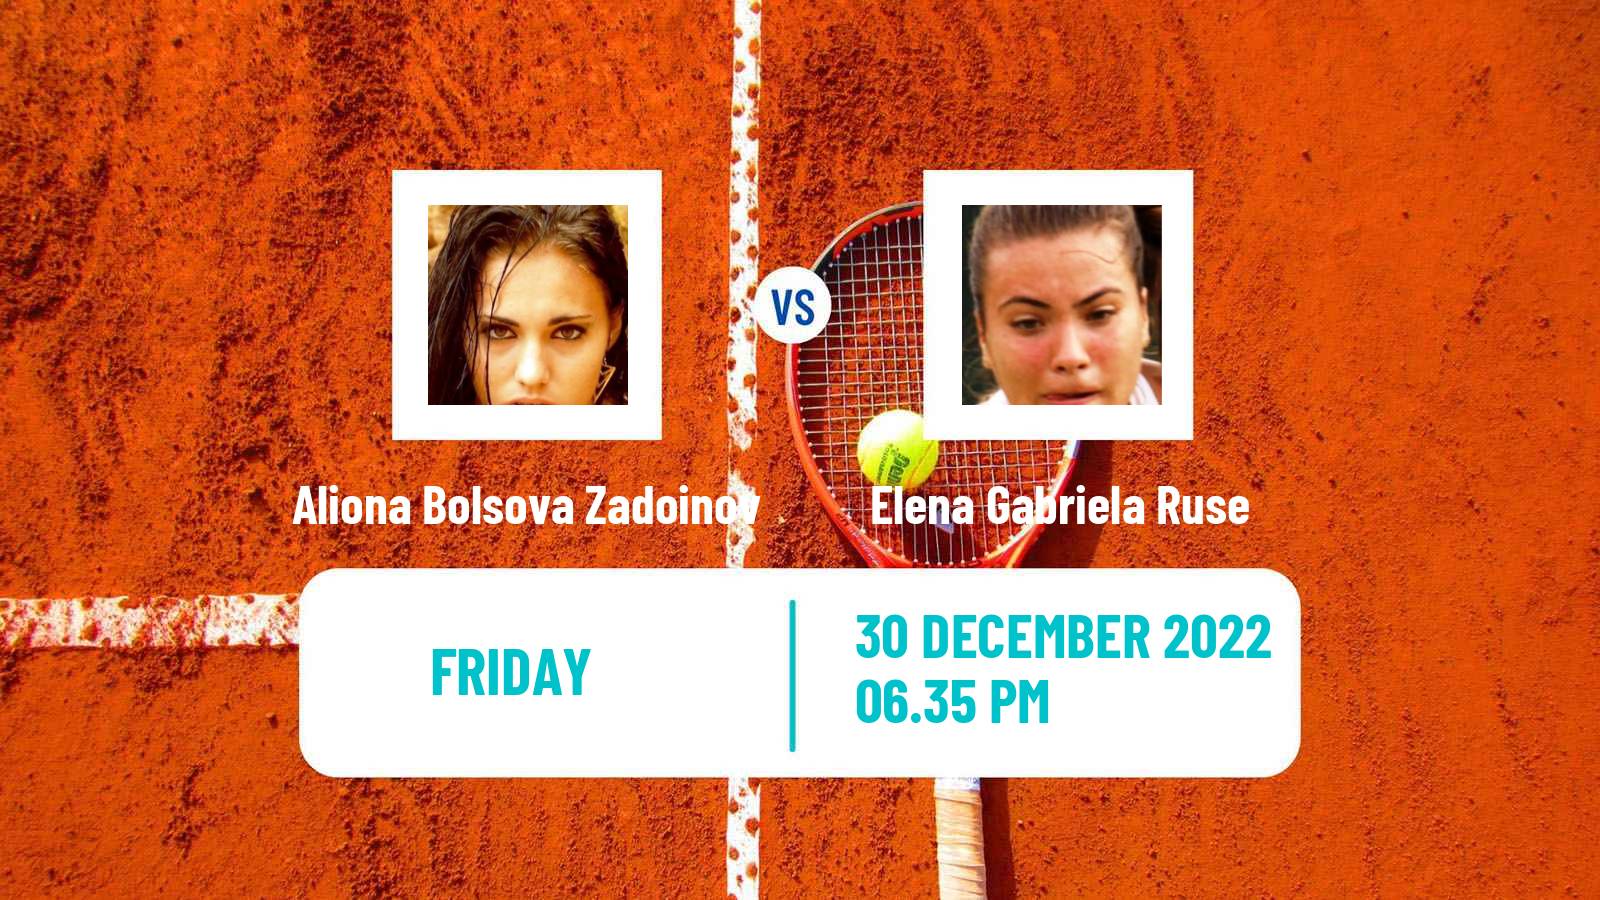 Tennis WTA Auckland Aliona Bolsova Zadoinov - Elena Gabriela Ruse